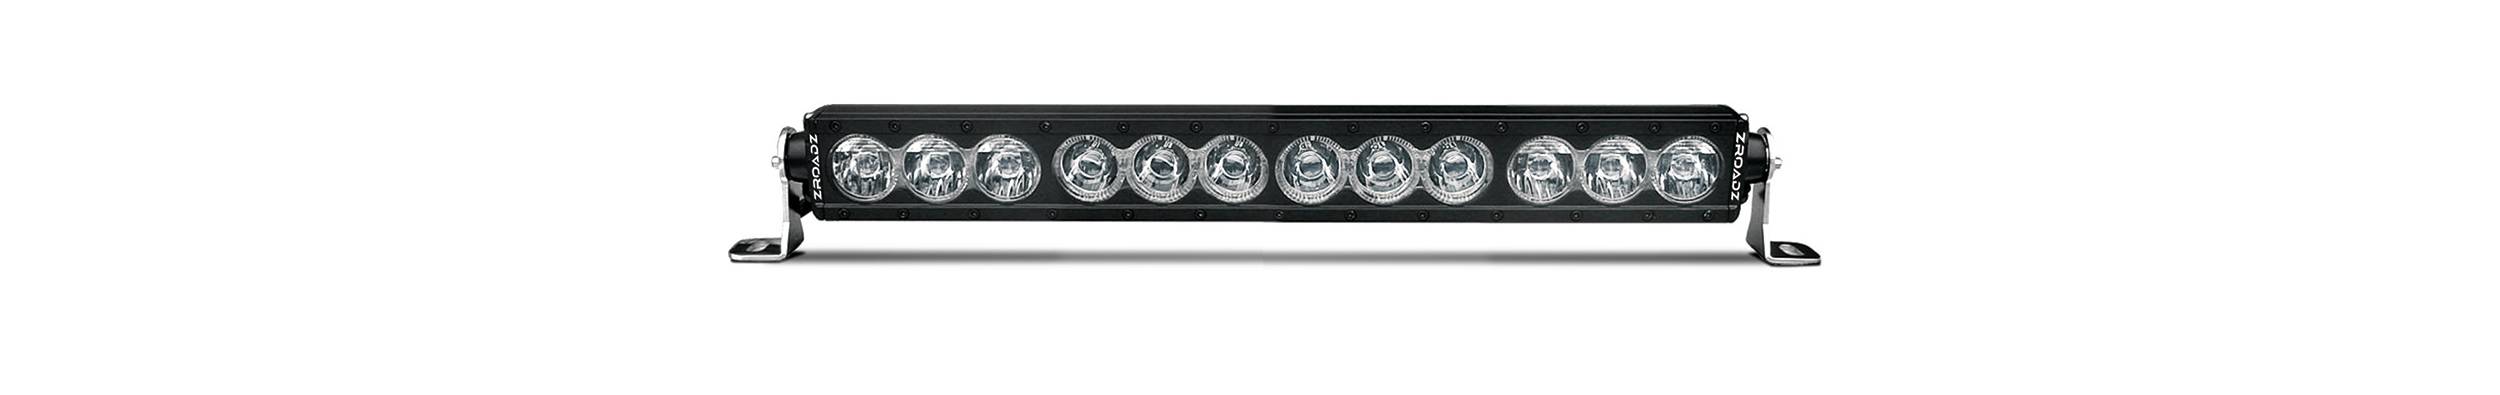 ZROADZ OFF ROAD PRODUCTS - 20 Inch LED Straight Single Row Tri Beam Light Bar - Part # Z30NTM01-20